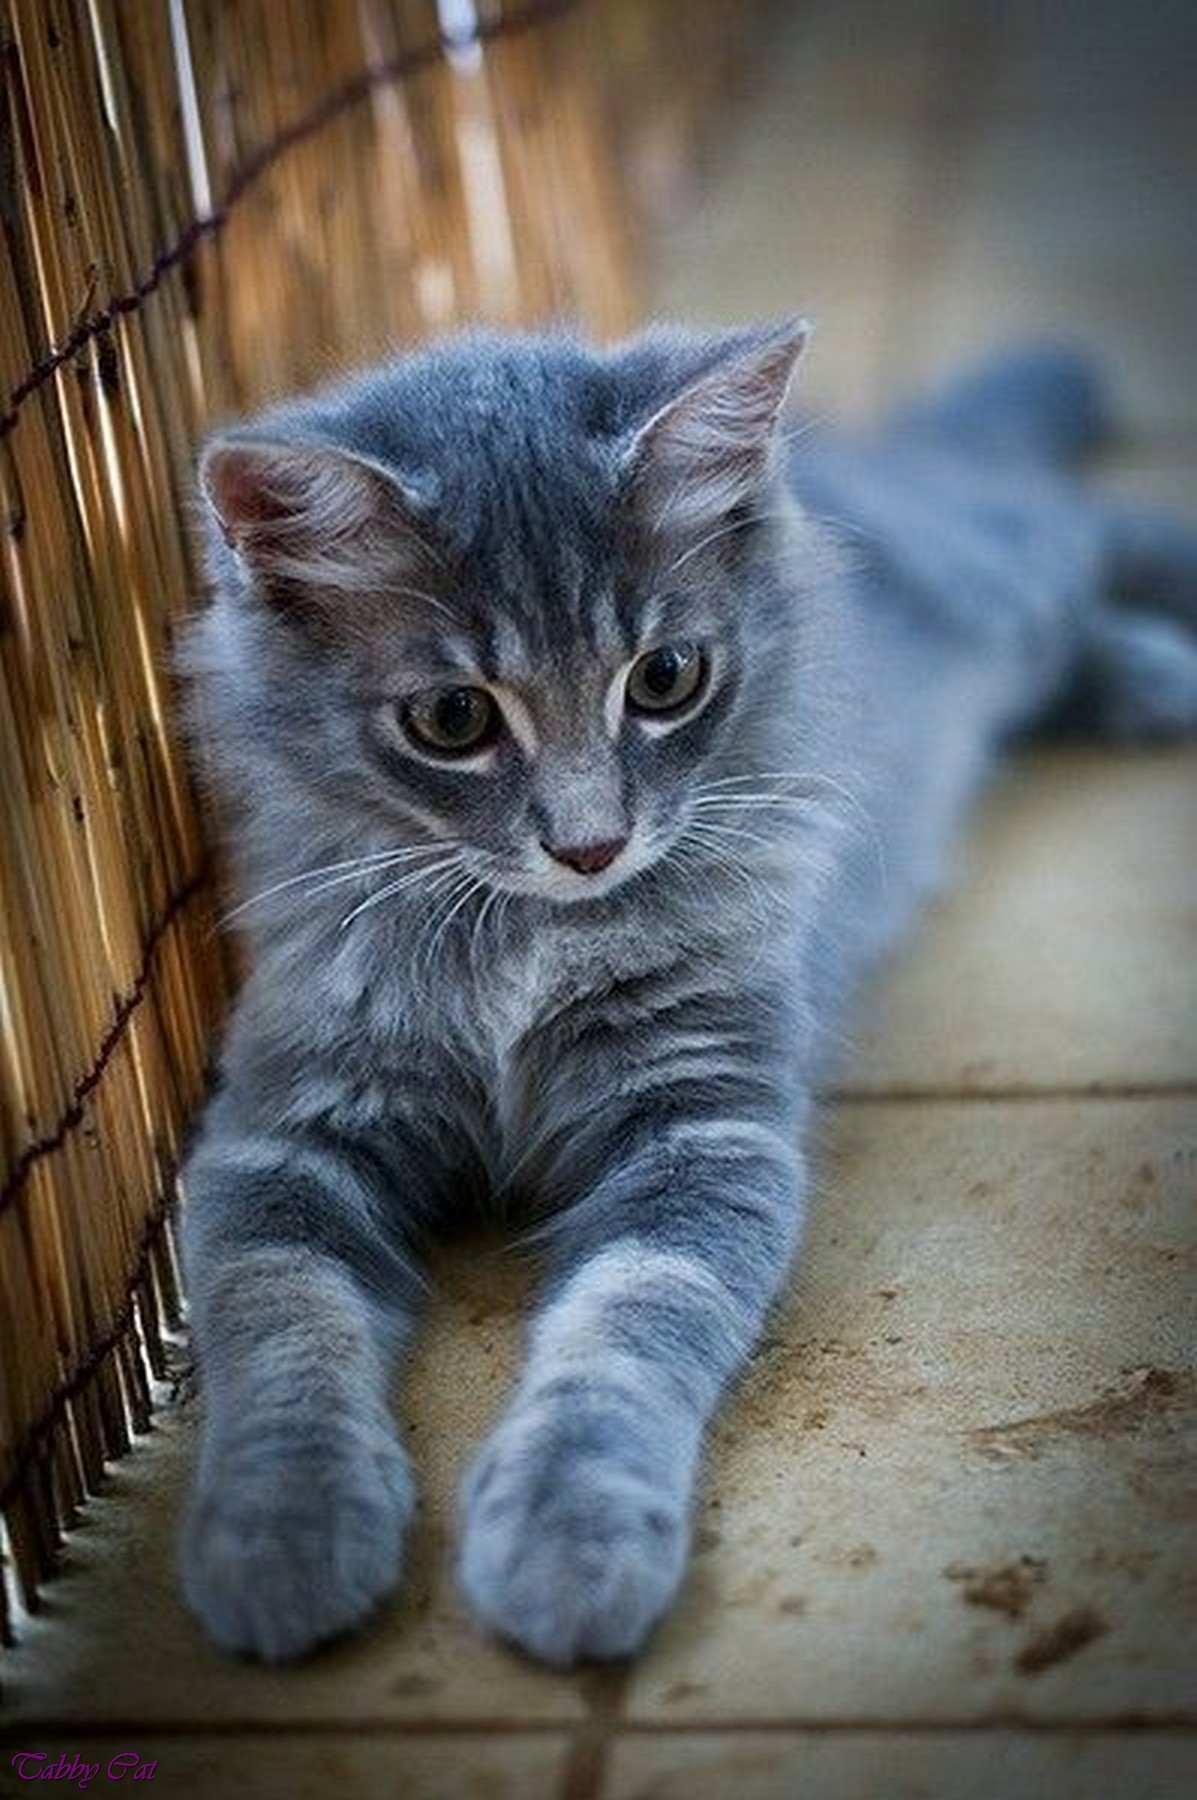 pretty grey tabby kitten with blue eyes